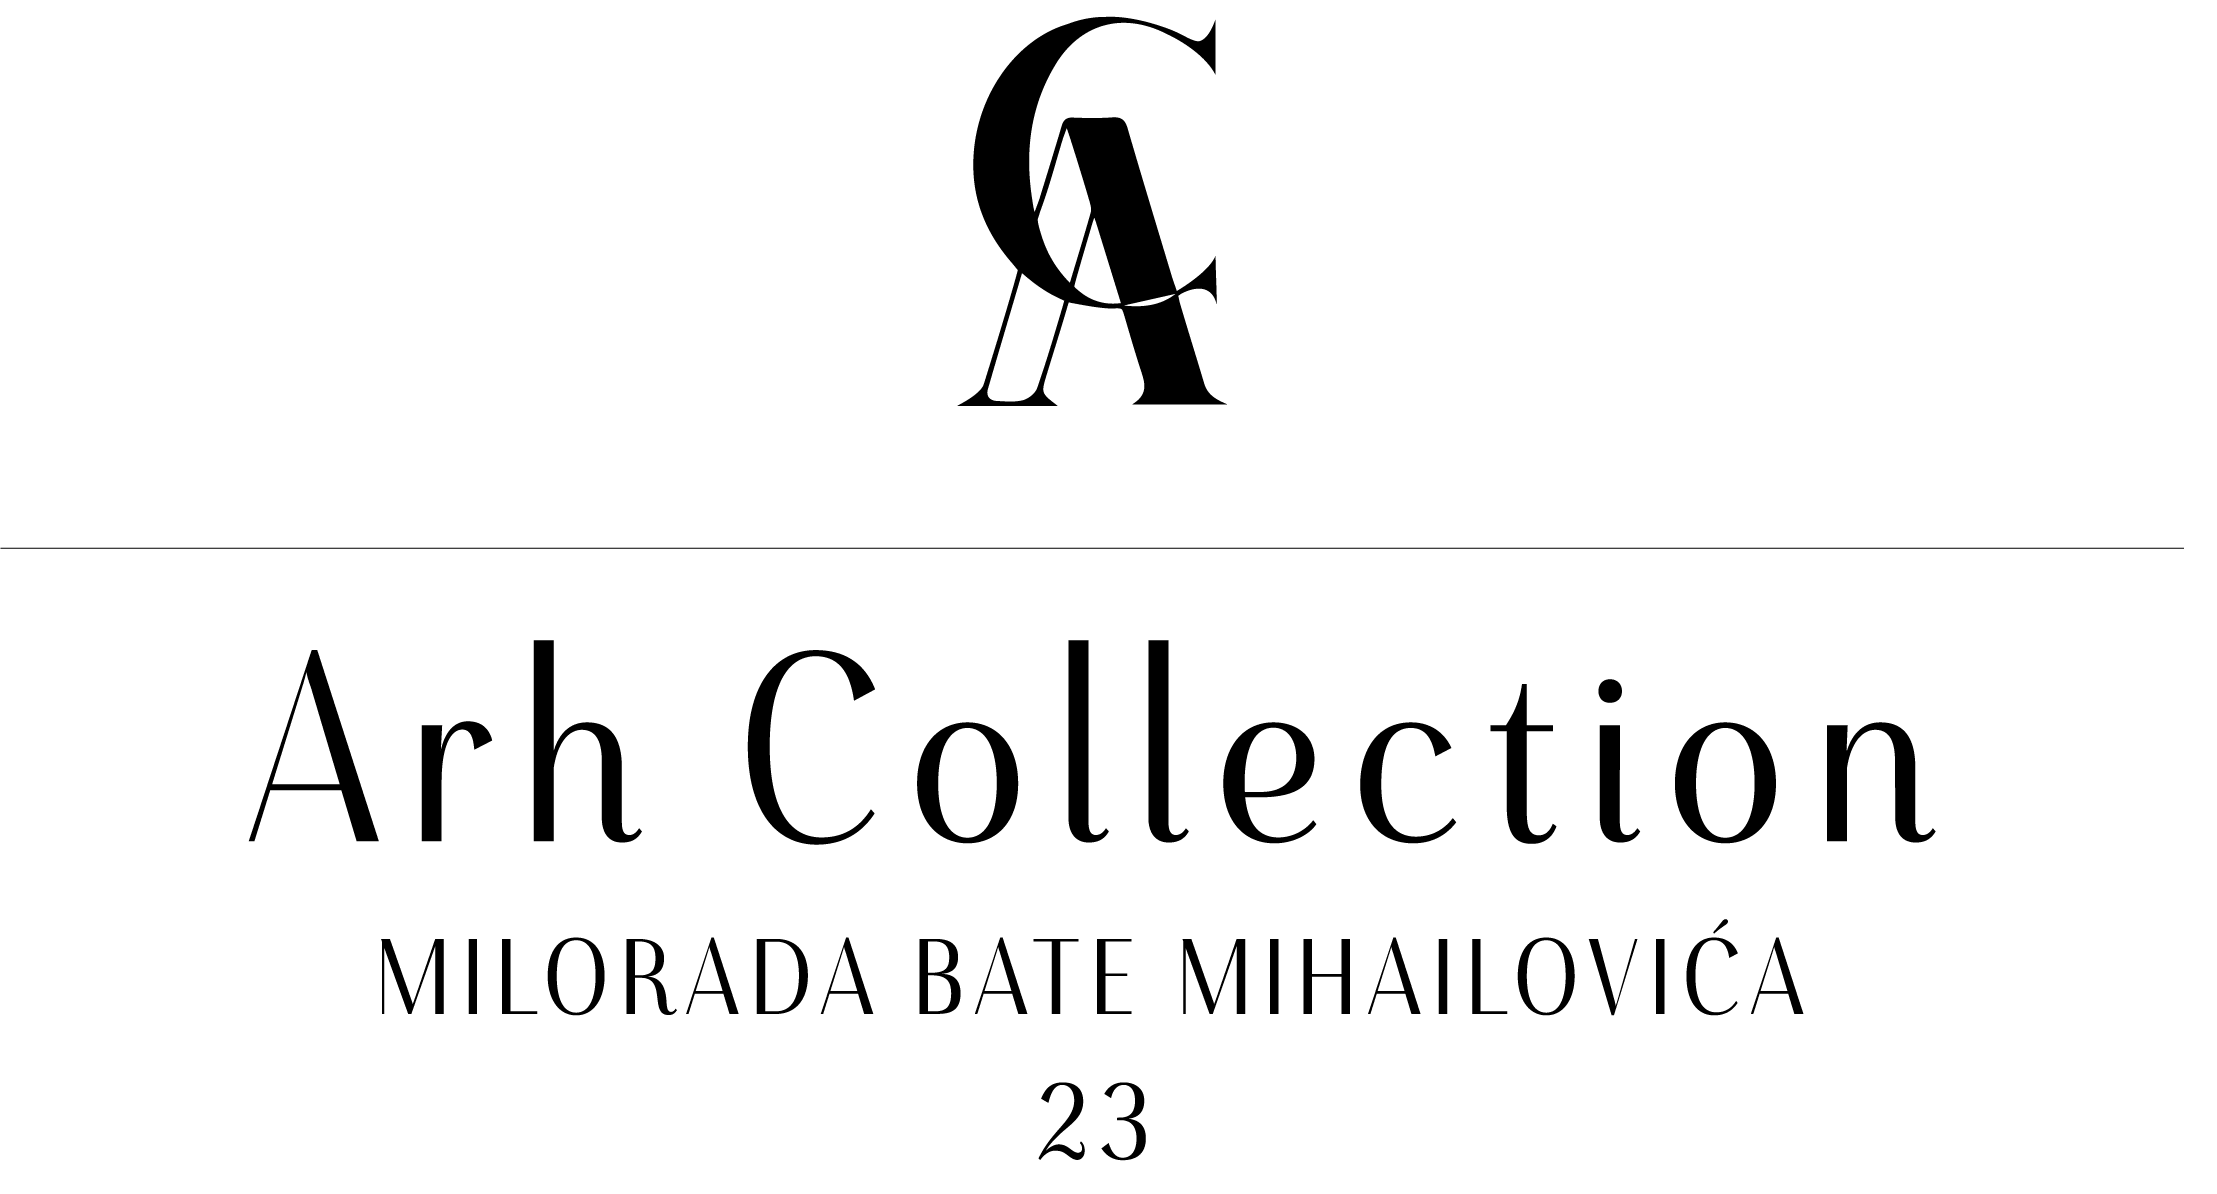 Arh Collection prodaja stanova